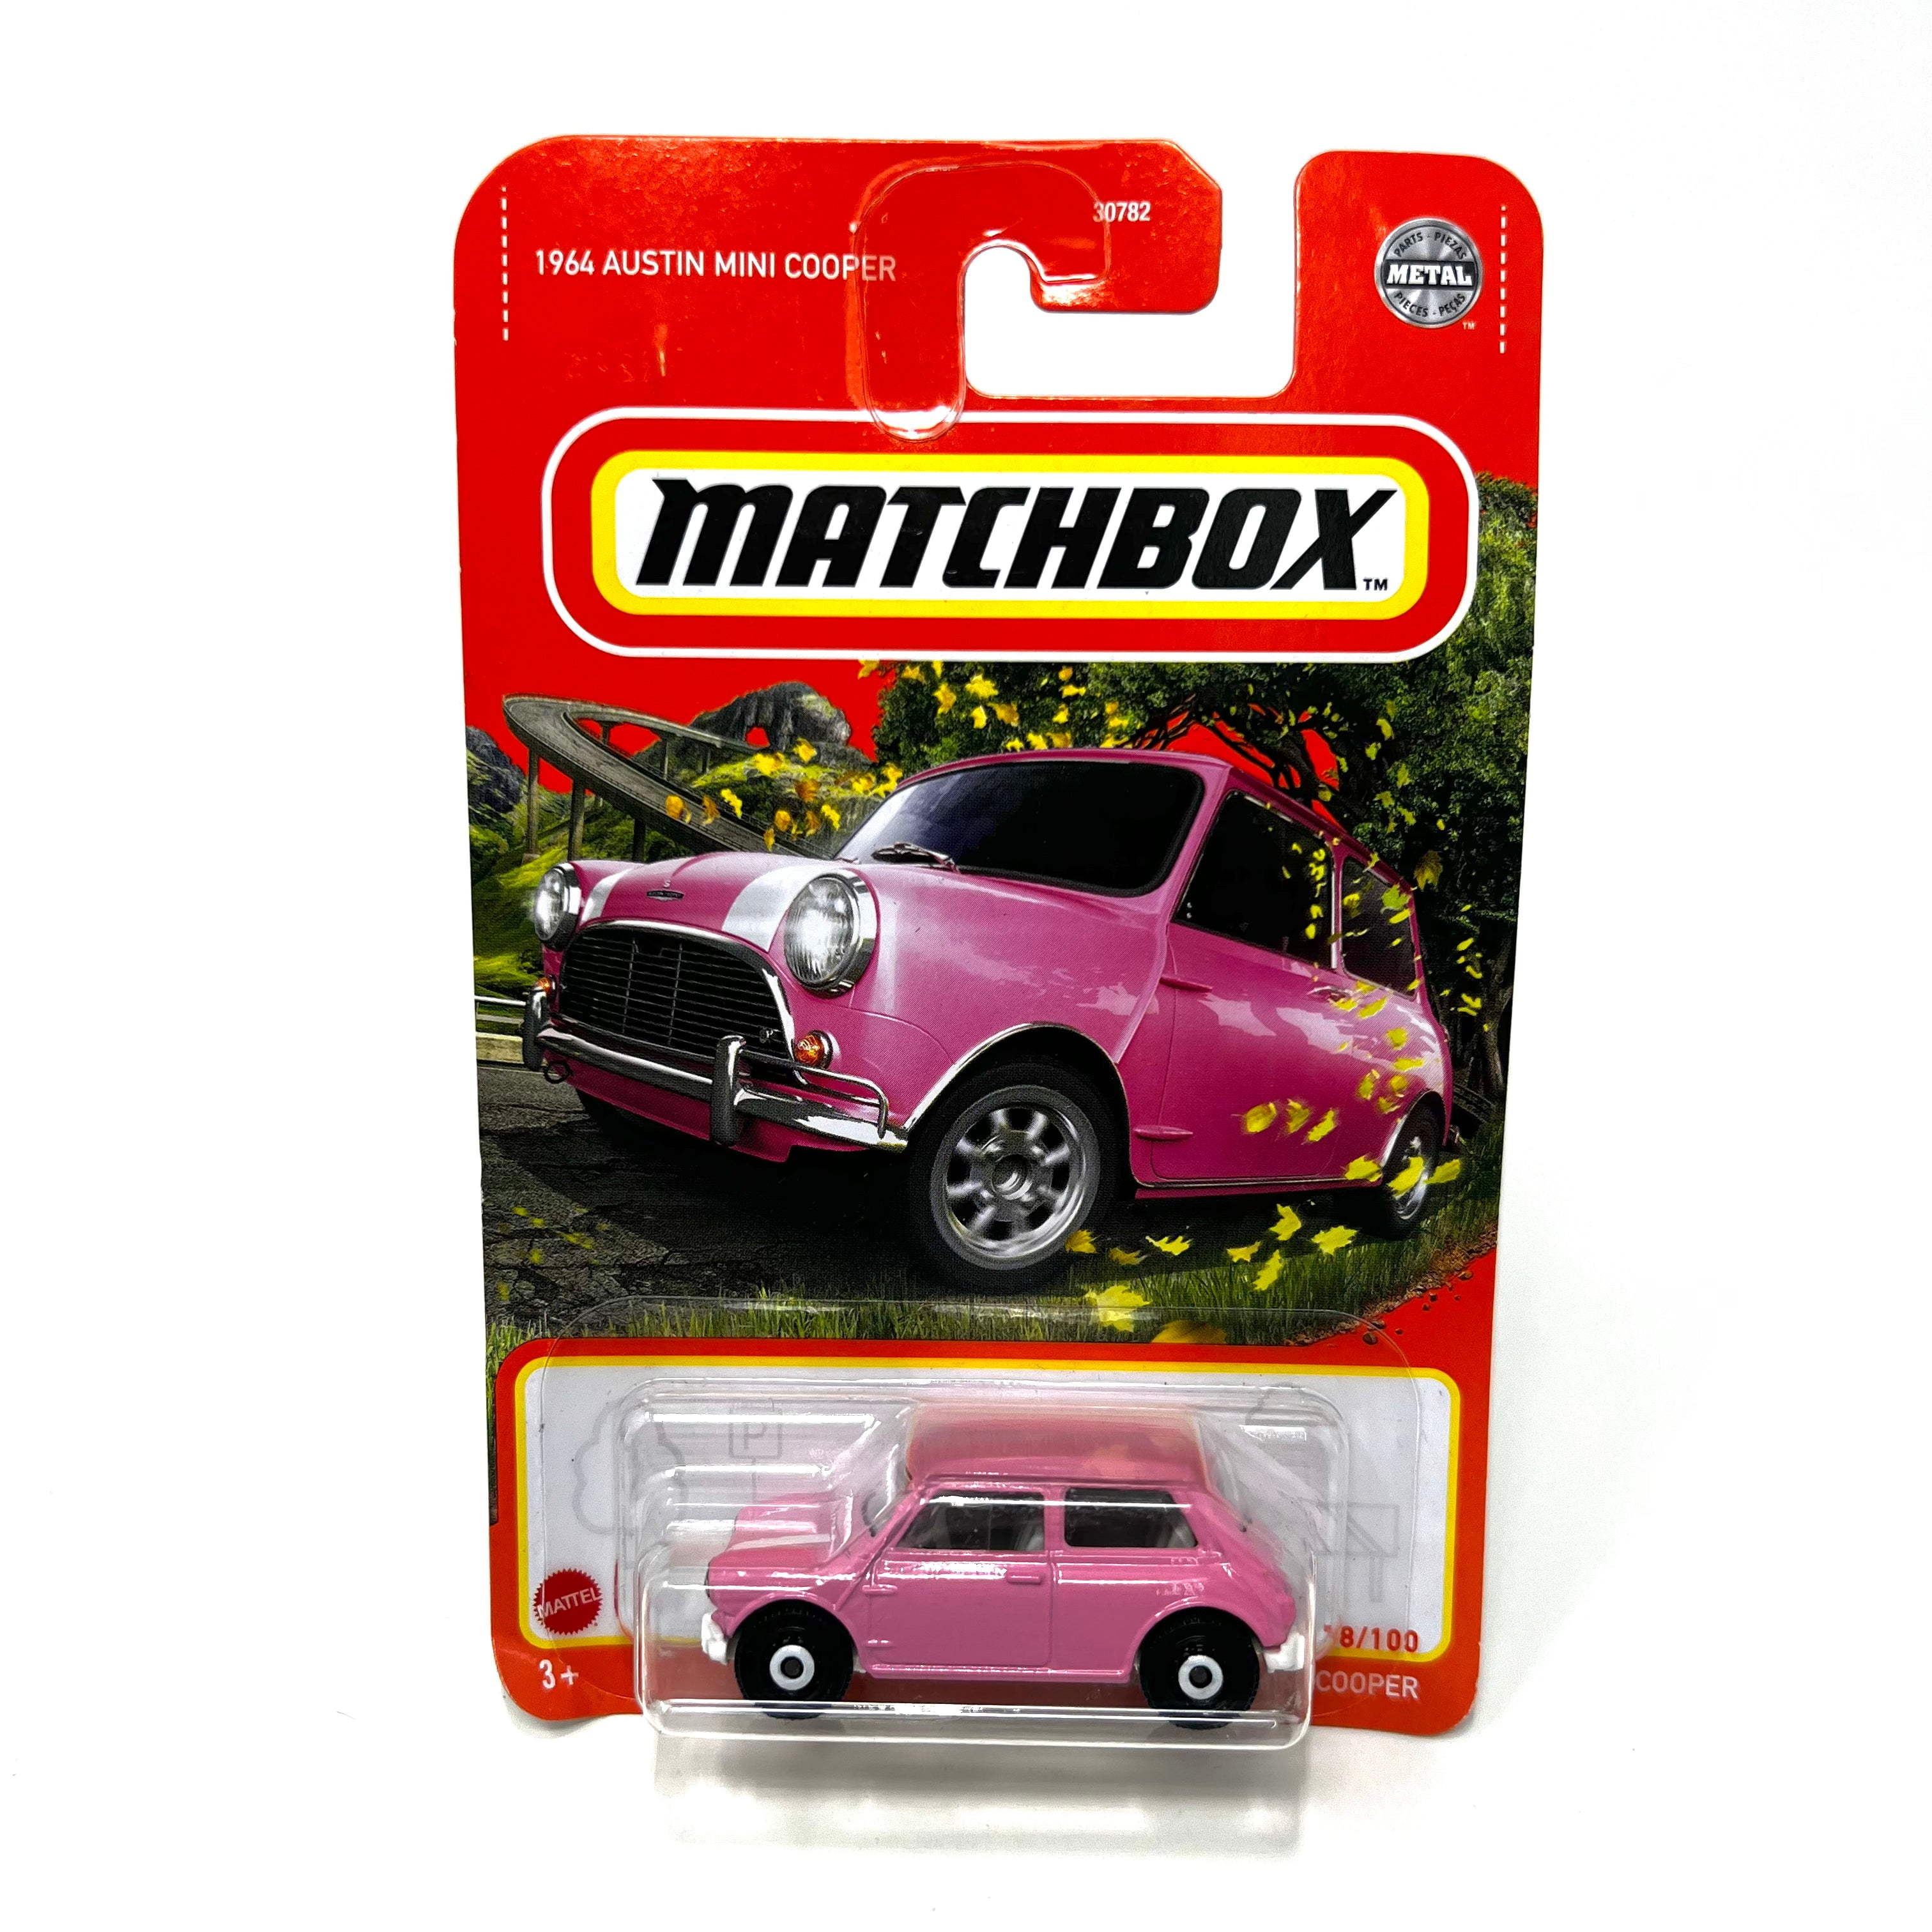 Matchbox 1:64 Scale 1964 Austin Mini Cooper Pink - Walmart.com